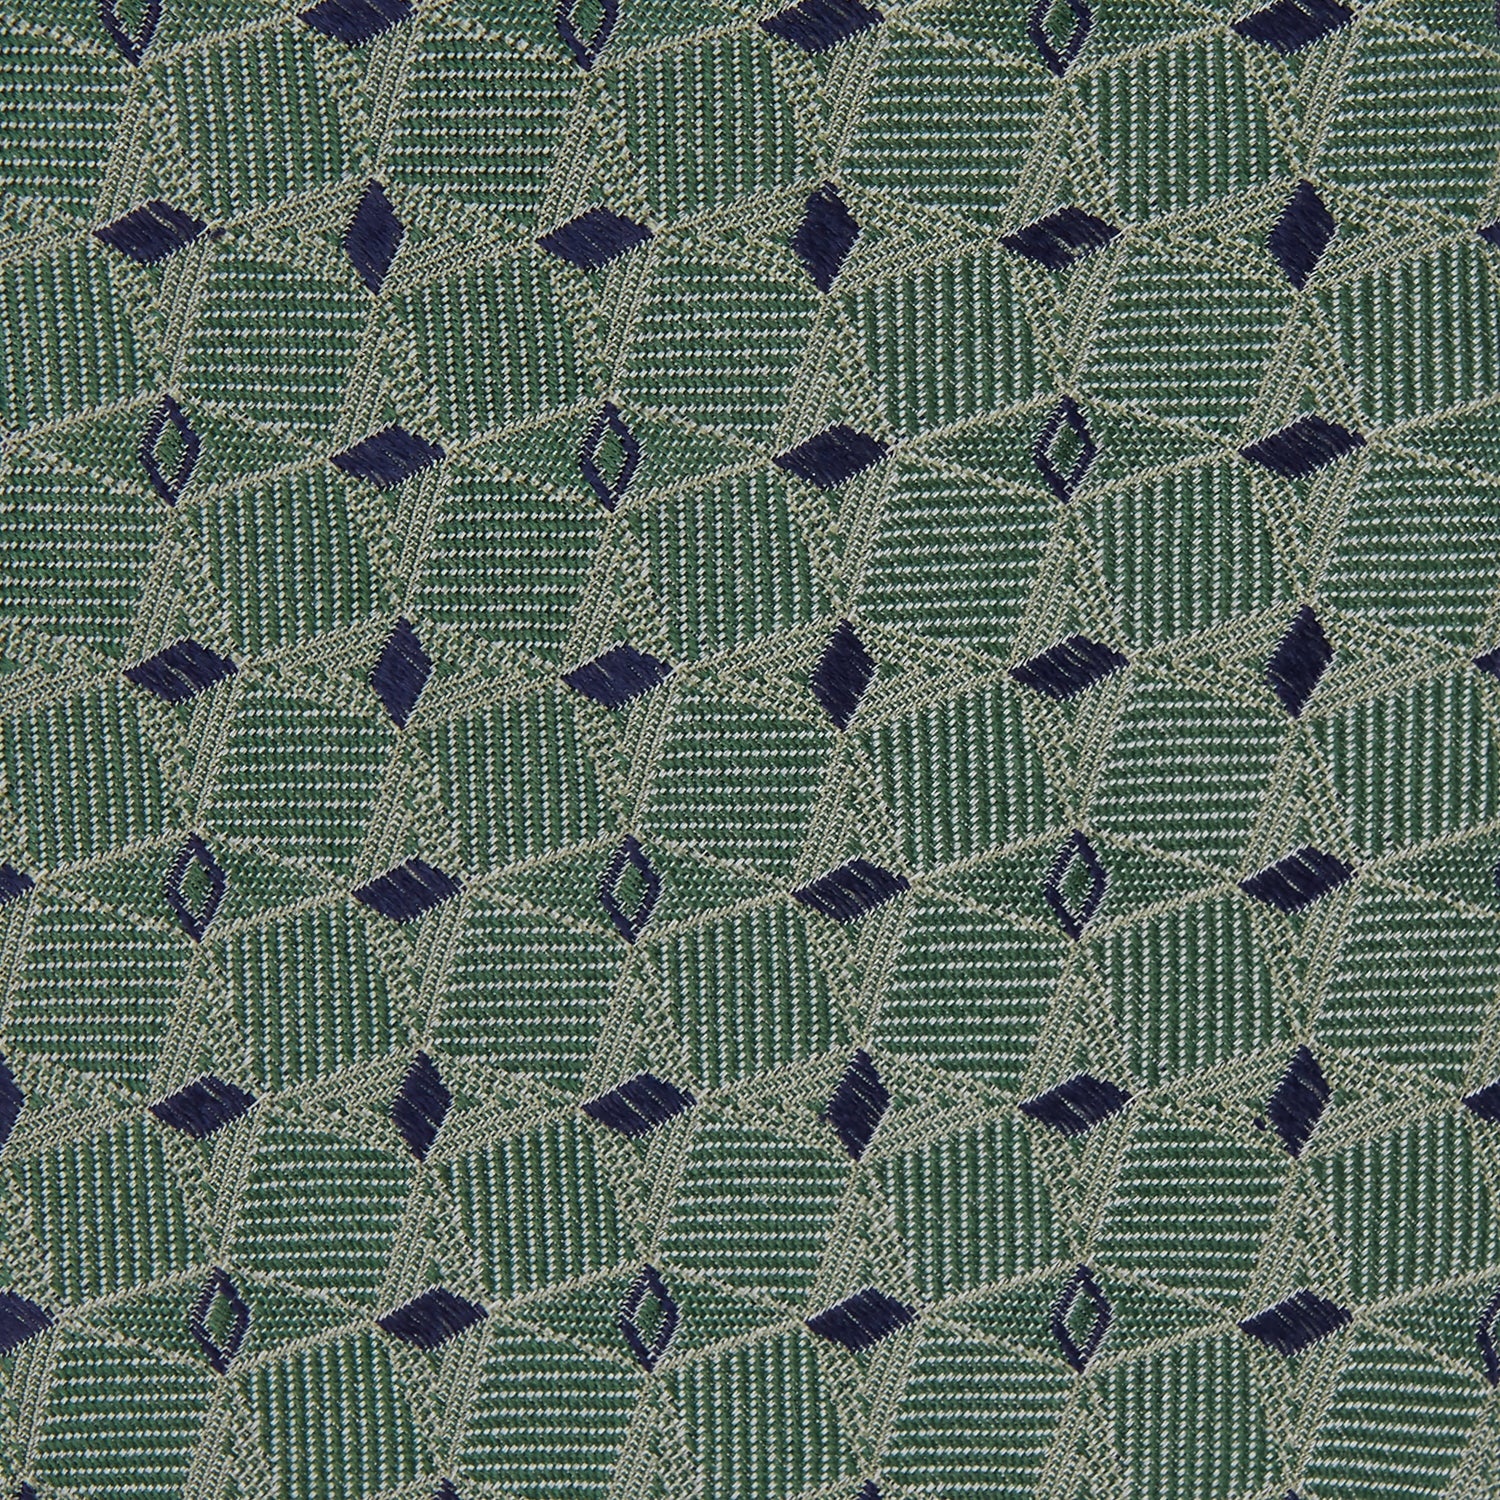 Green Geometric Diamond Tie